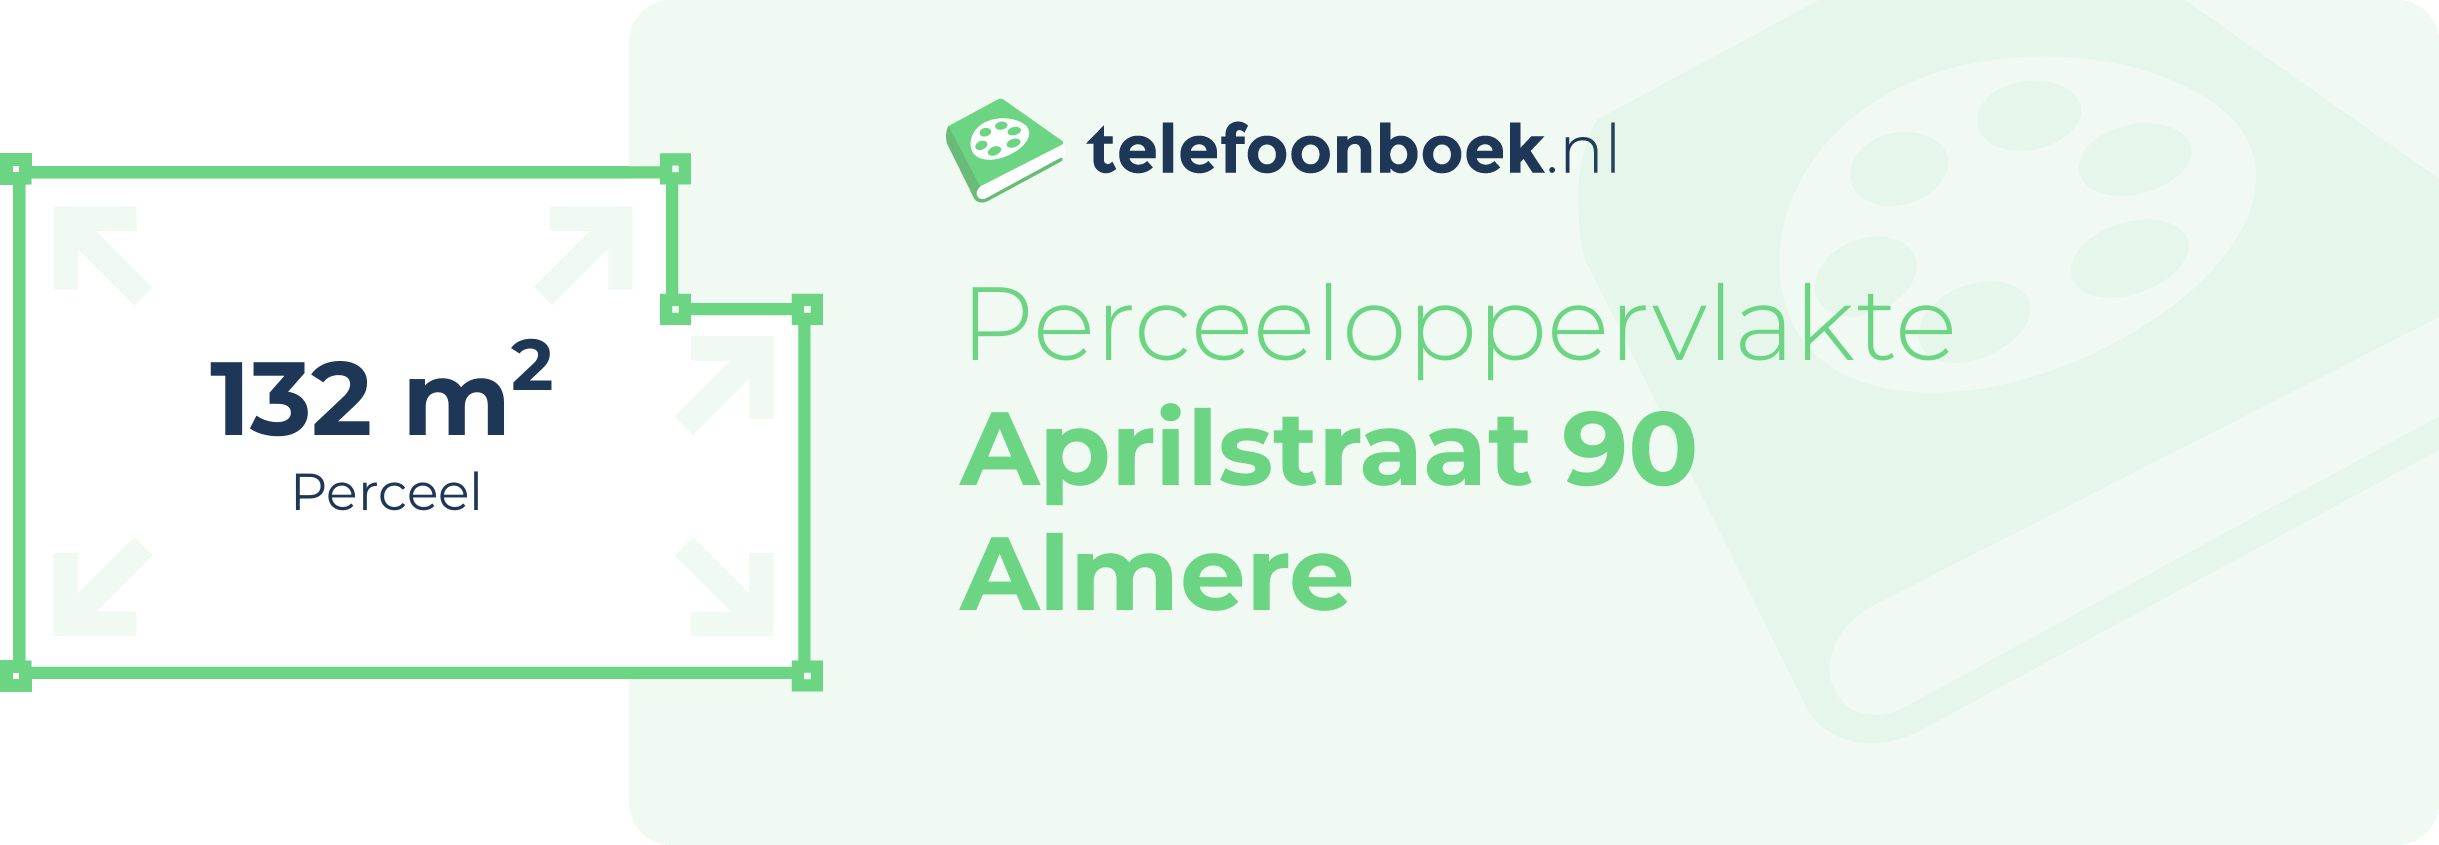 Perceeloppervlakte Aprilstraat 90 Almere